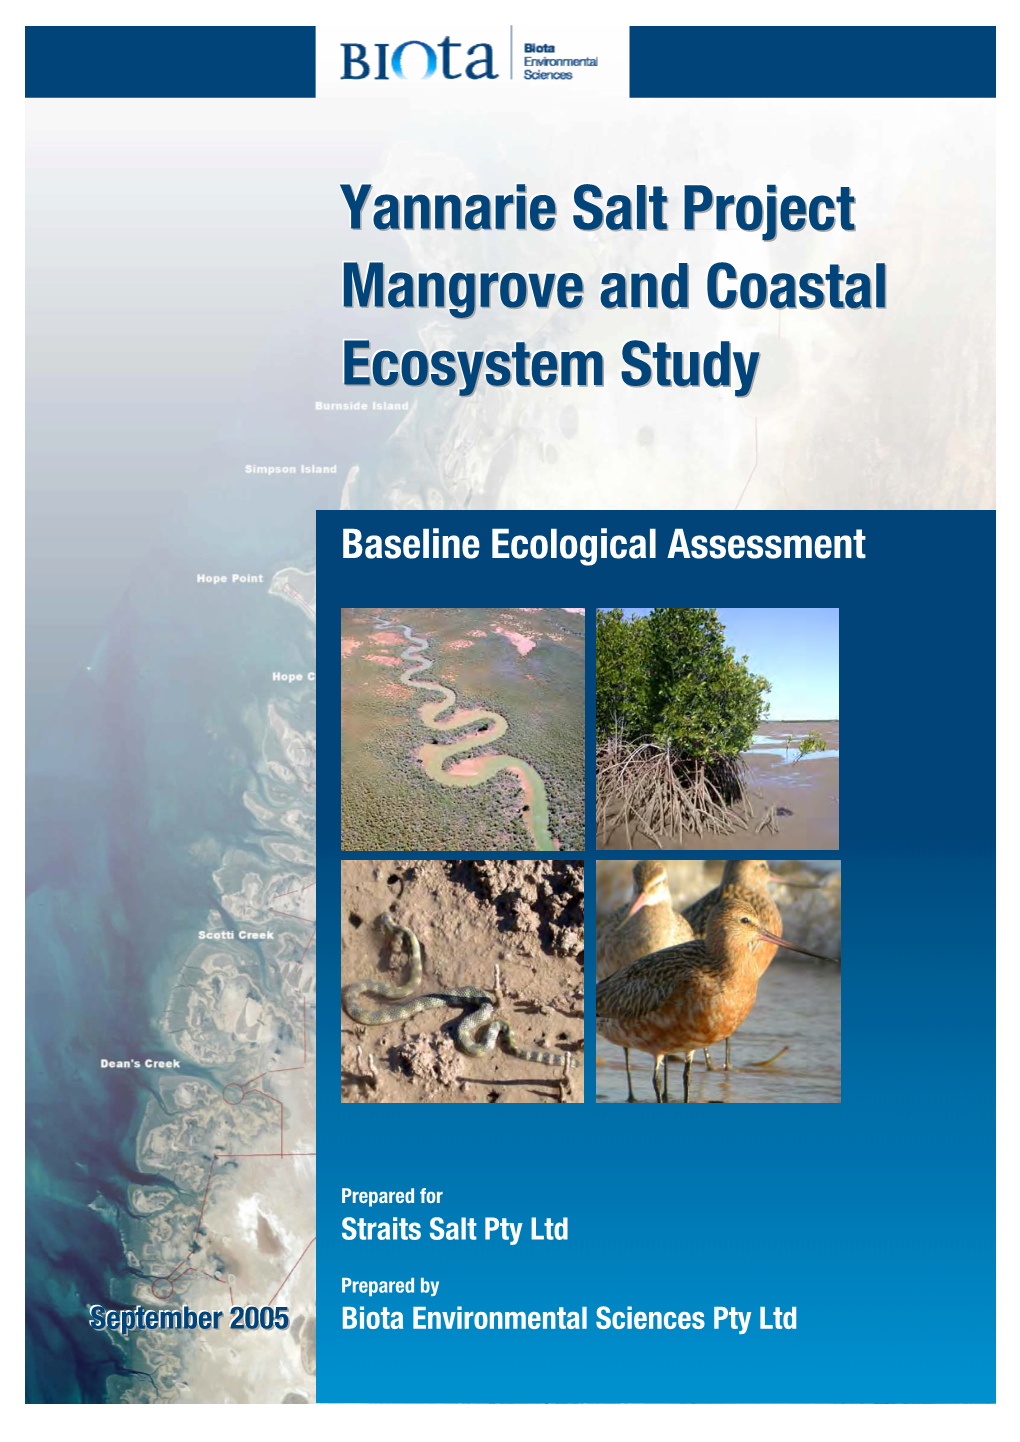 Yannarie Salt Project Mangrove and Coastal Ecosystem Study